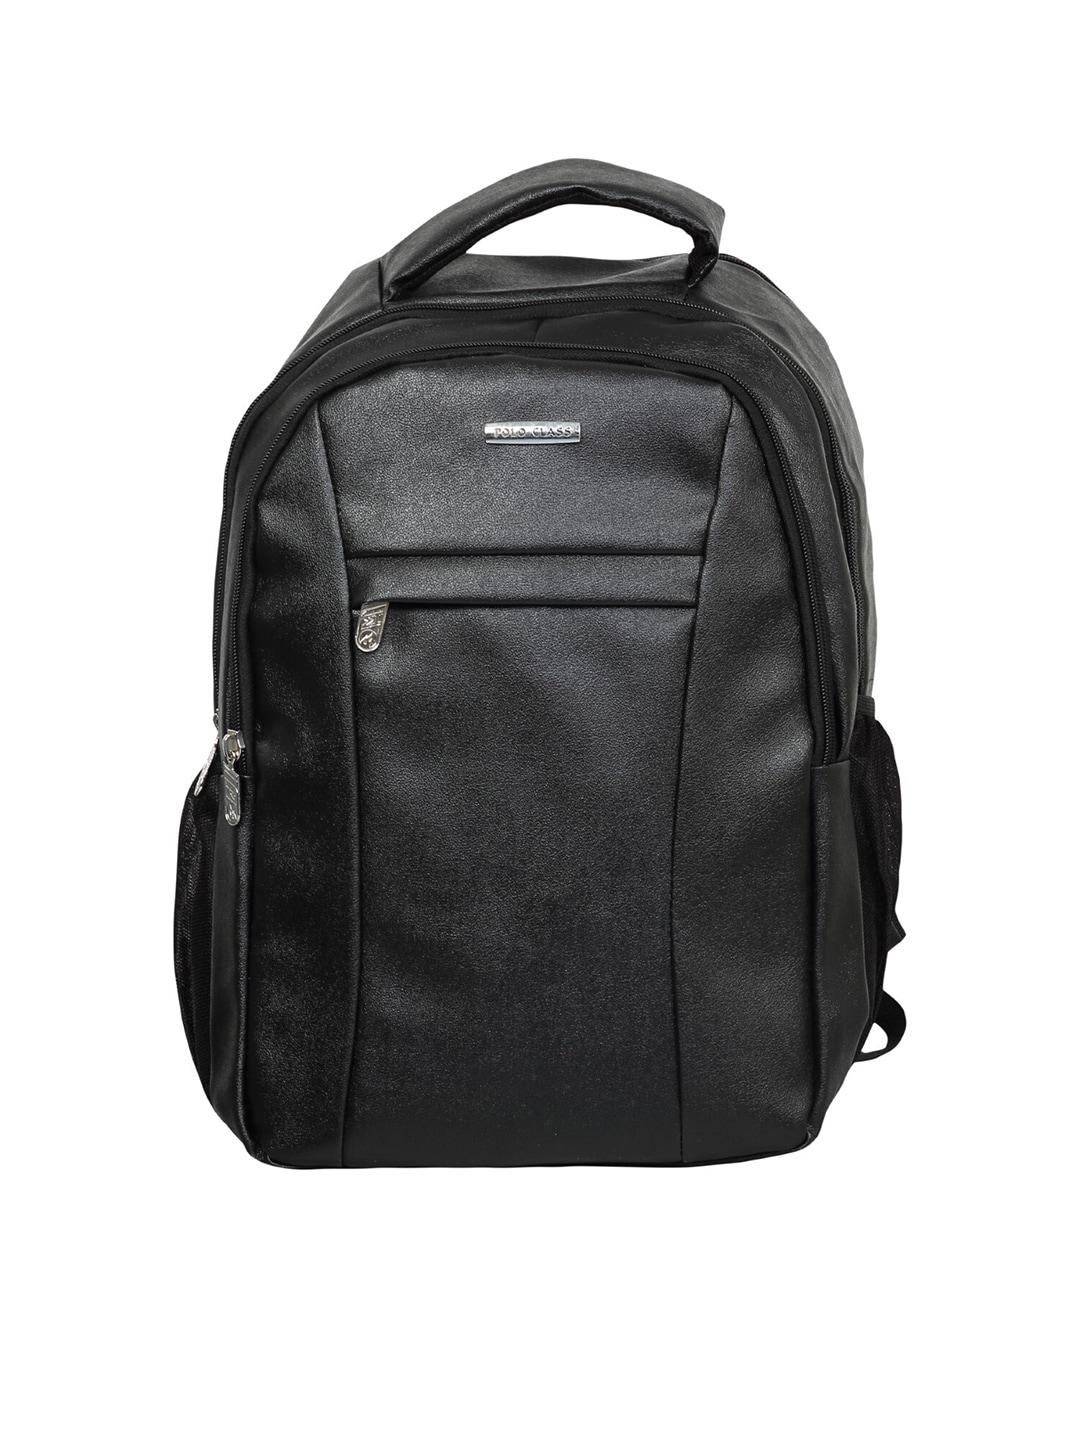 Polo Class Unisex Kids Black PU Laptop Bag